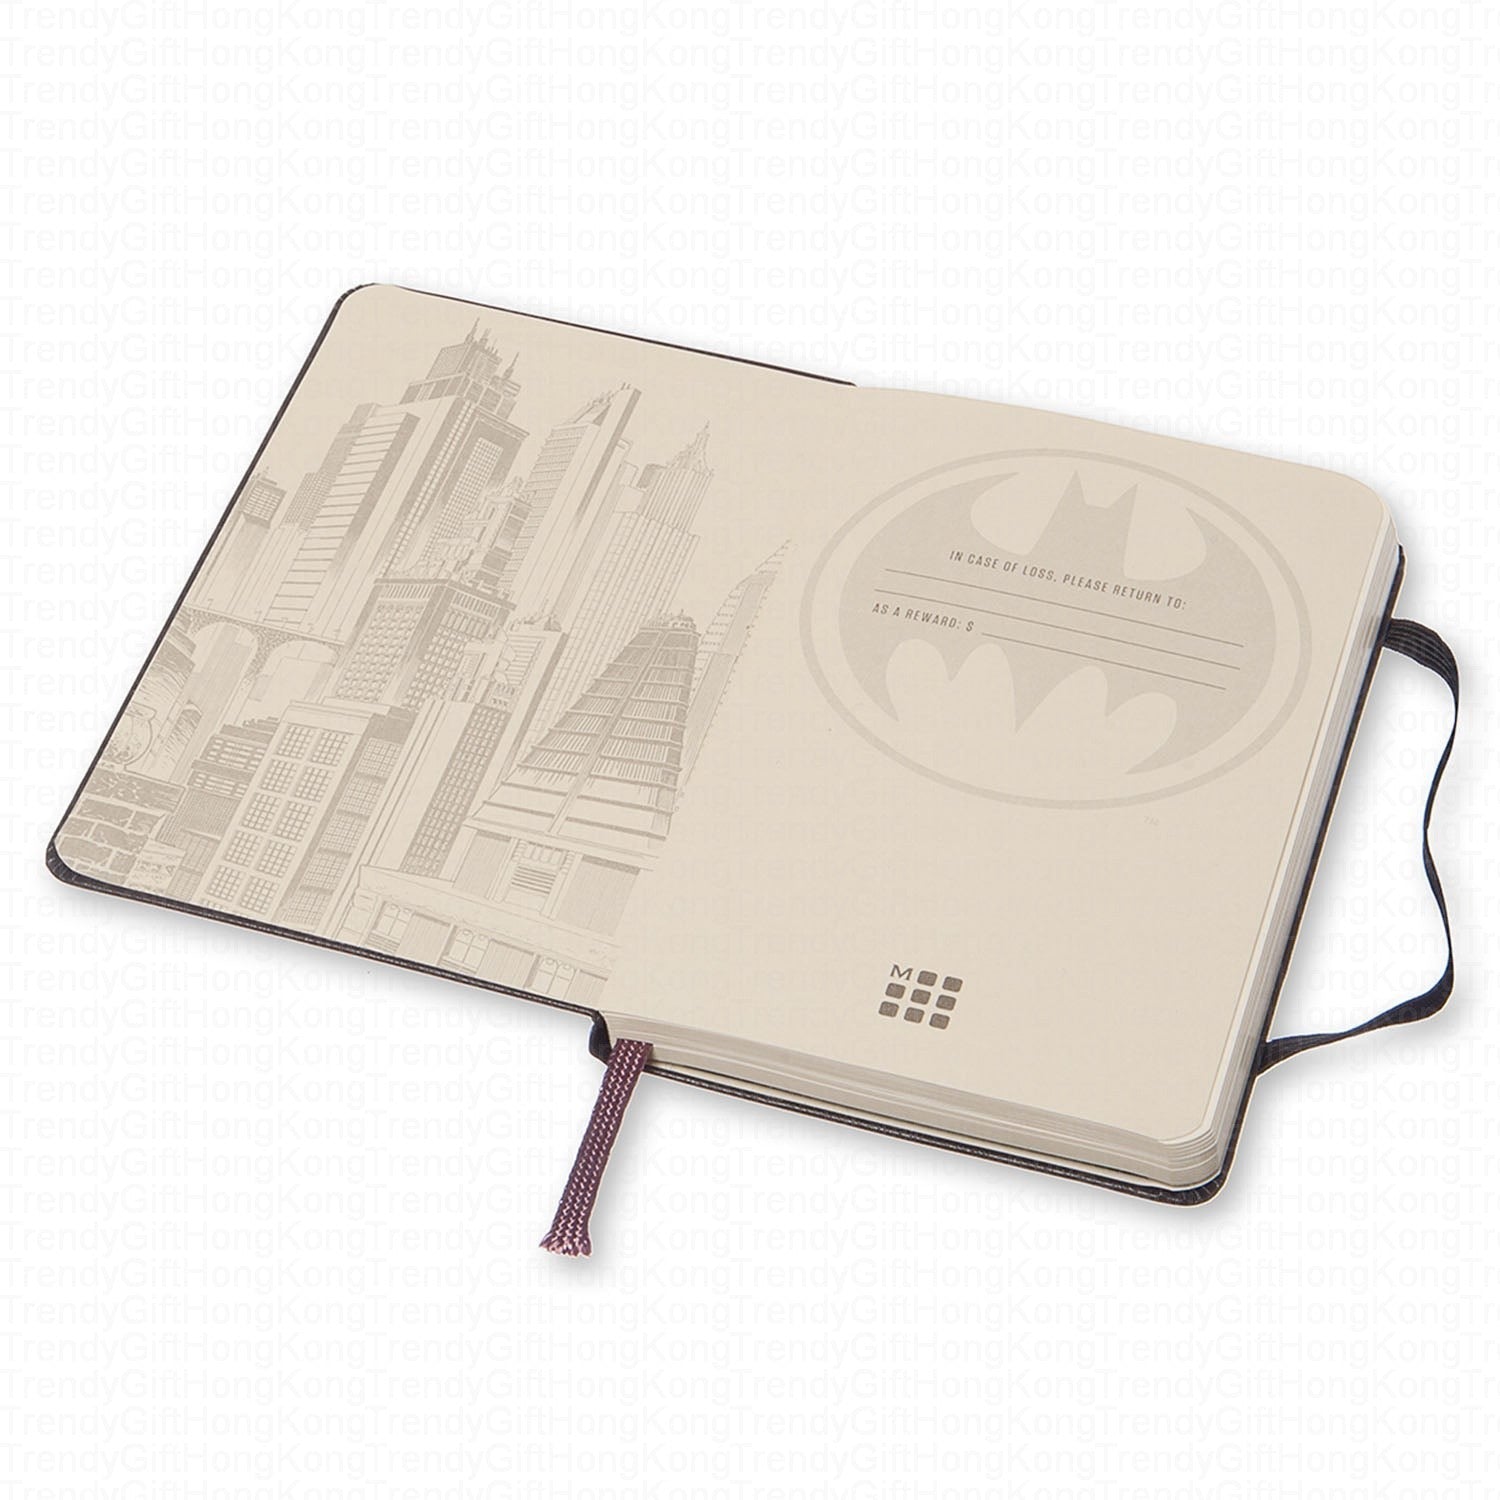 Moleskine Batman Limited Edition Pocket Notebook - Plain Black trendygifthk